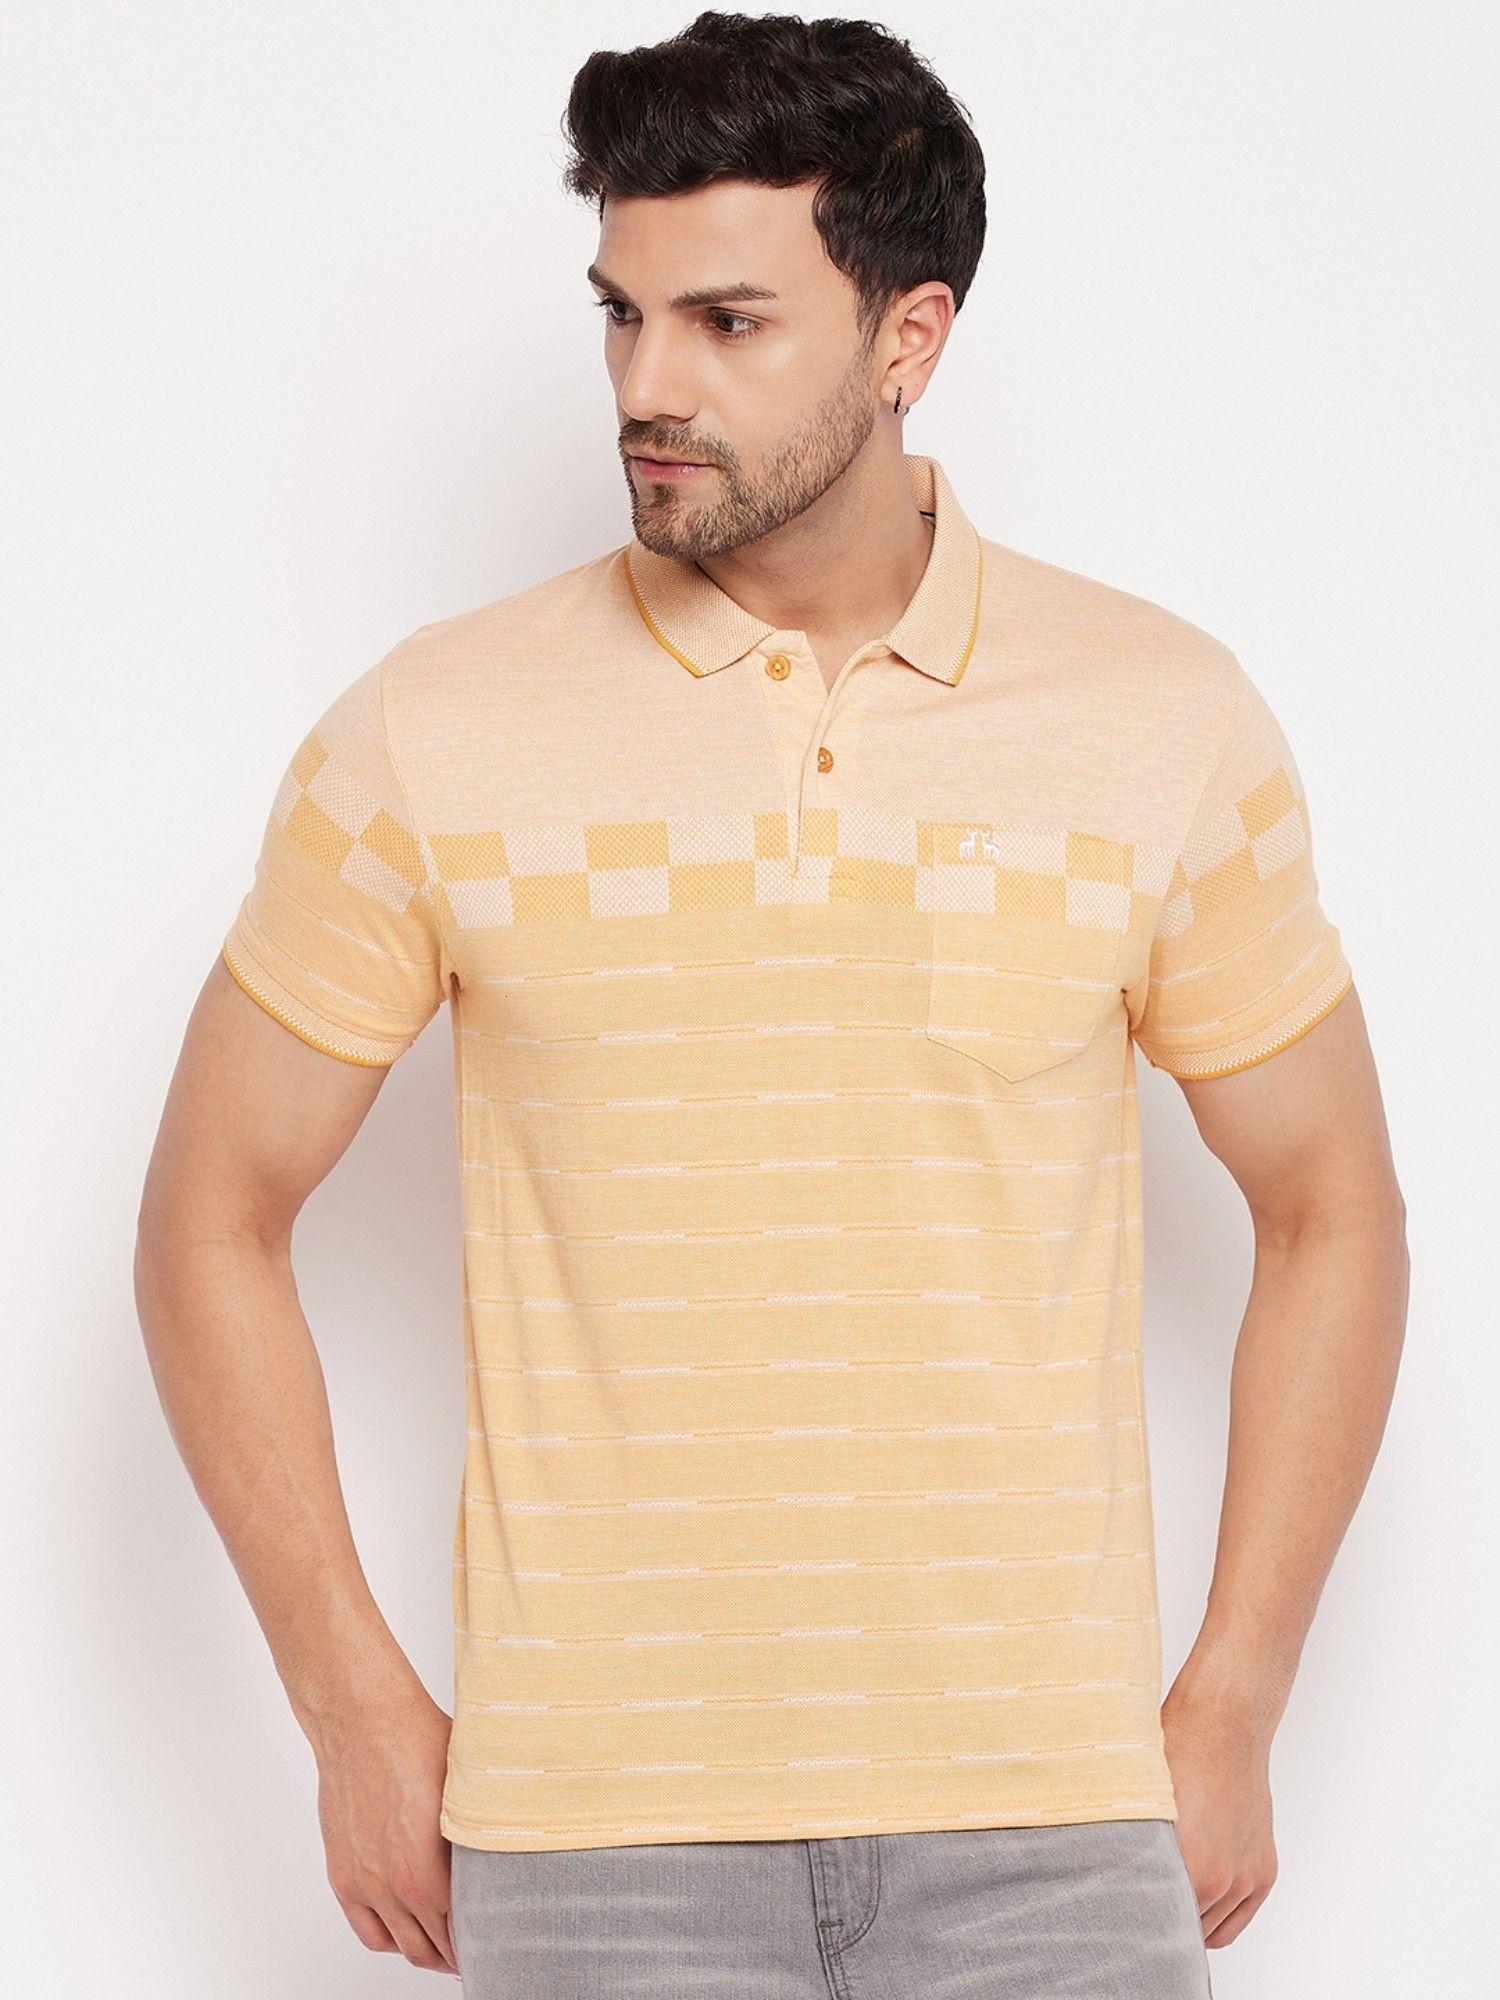 mens cotton blend yellow polo neck t-shirt